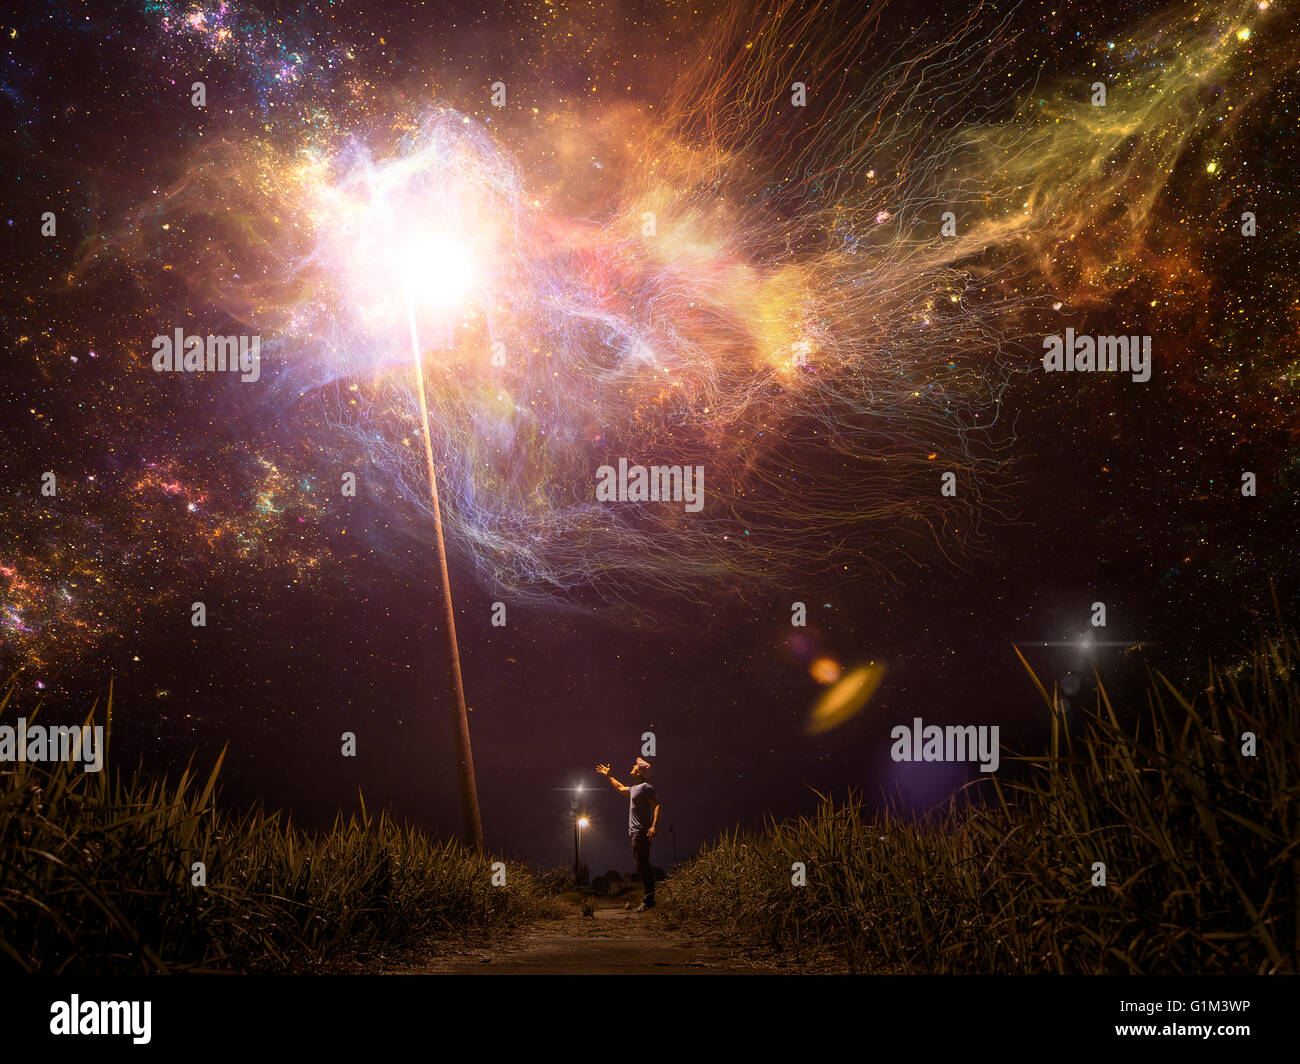 Caucasian man reaching towards light in starry night sky Stock Photo